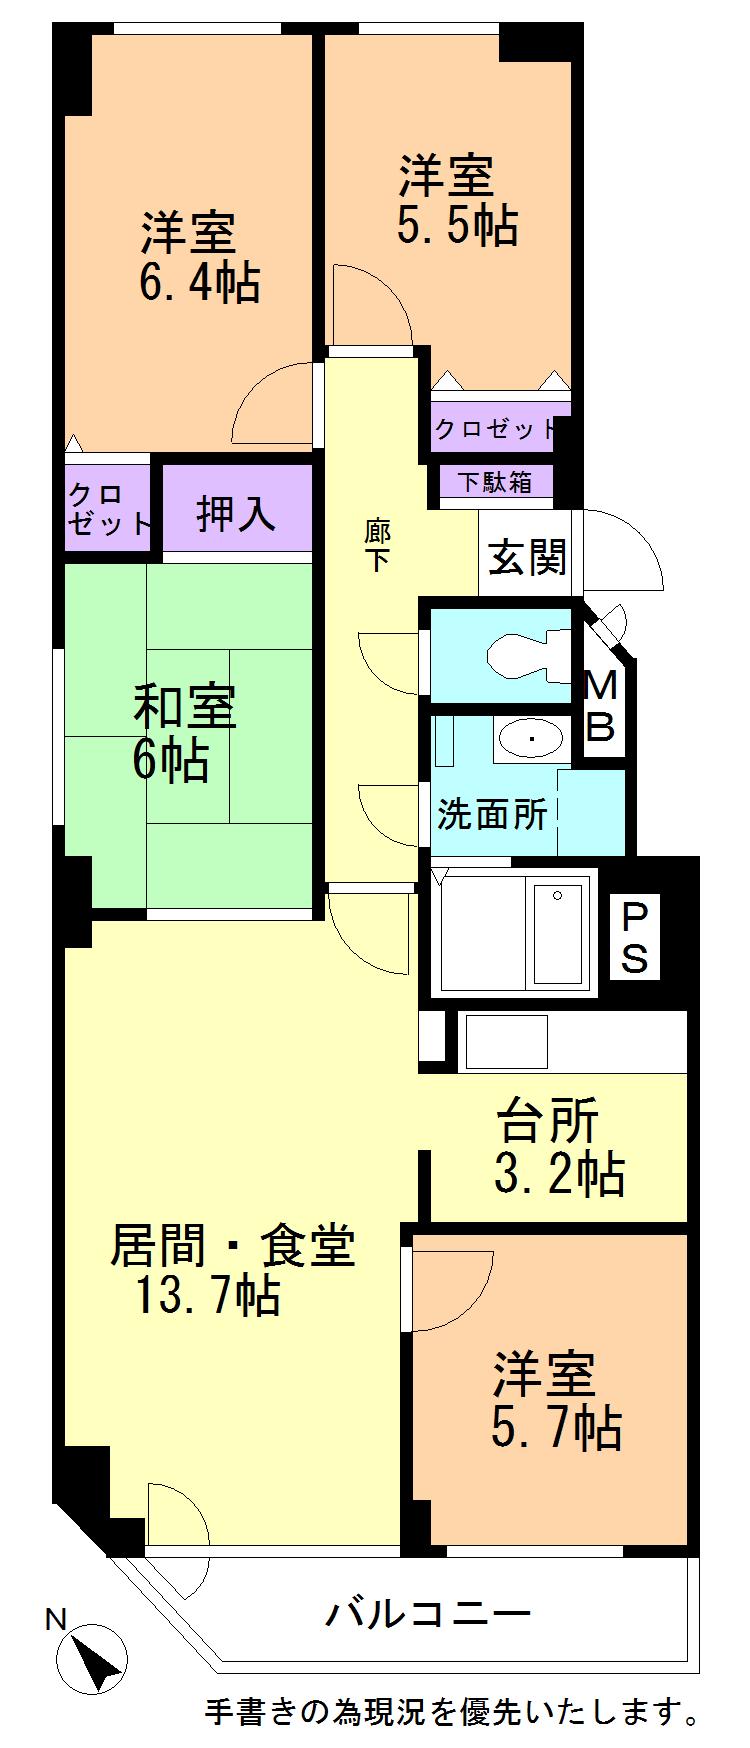 Floor plan. 4LDK, Price 8.5 million yen, Occupied area 84.72 sq m , Balcony area 6.09 sq m